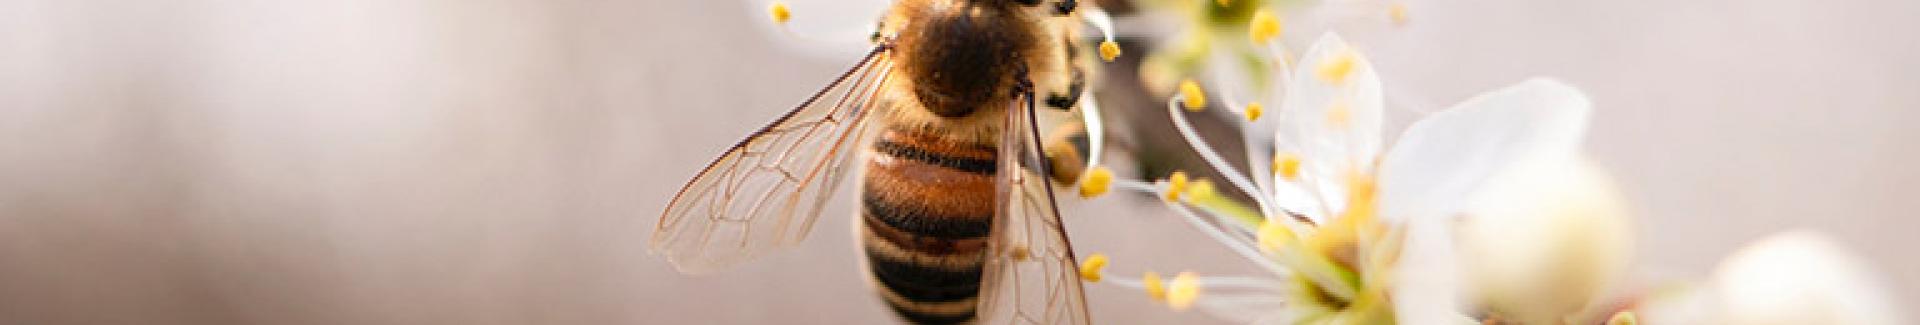 Wilde wespen en bijen